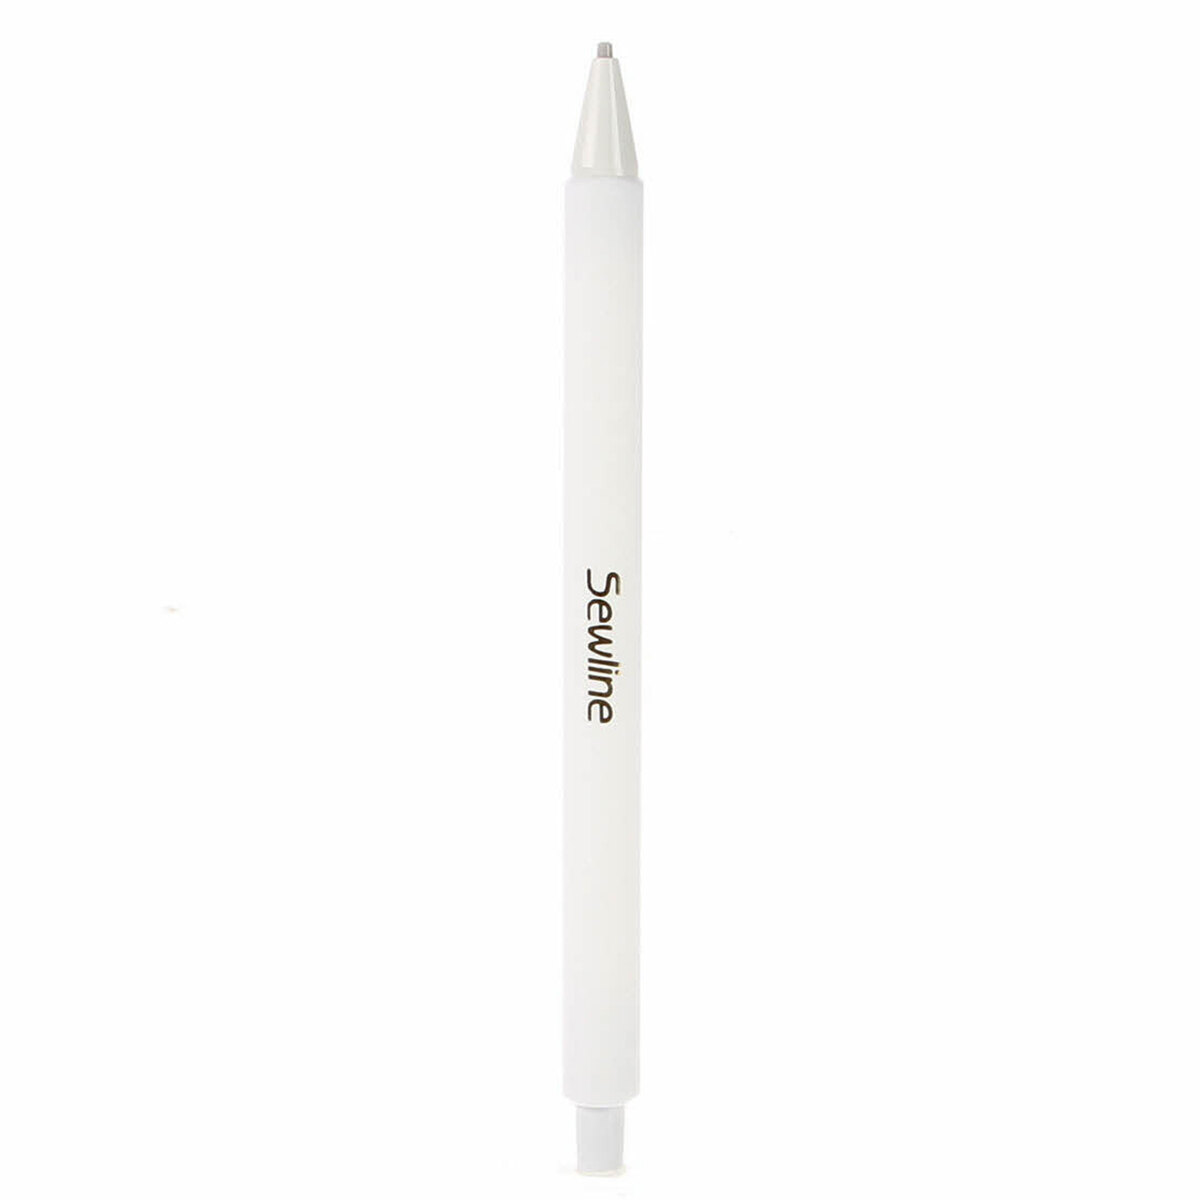 Sewline Fabric Pencil - White